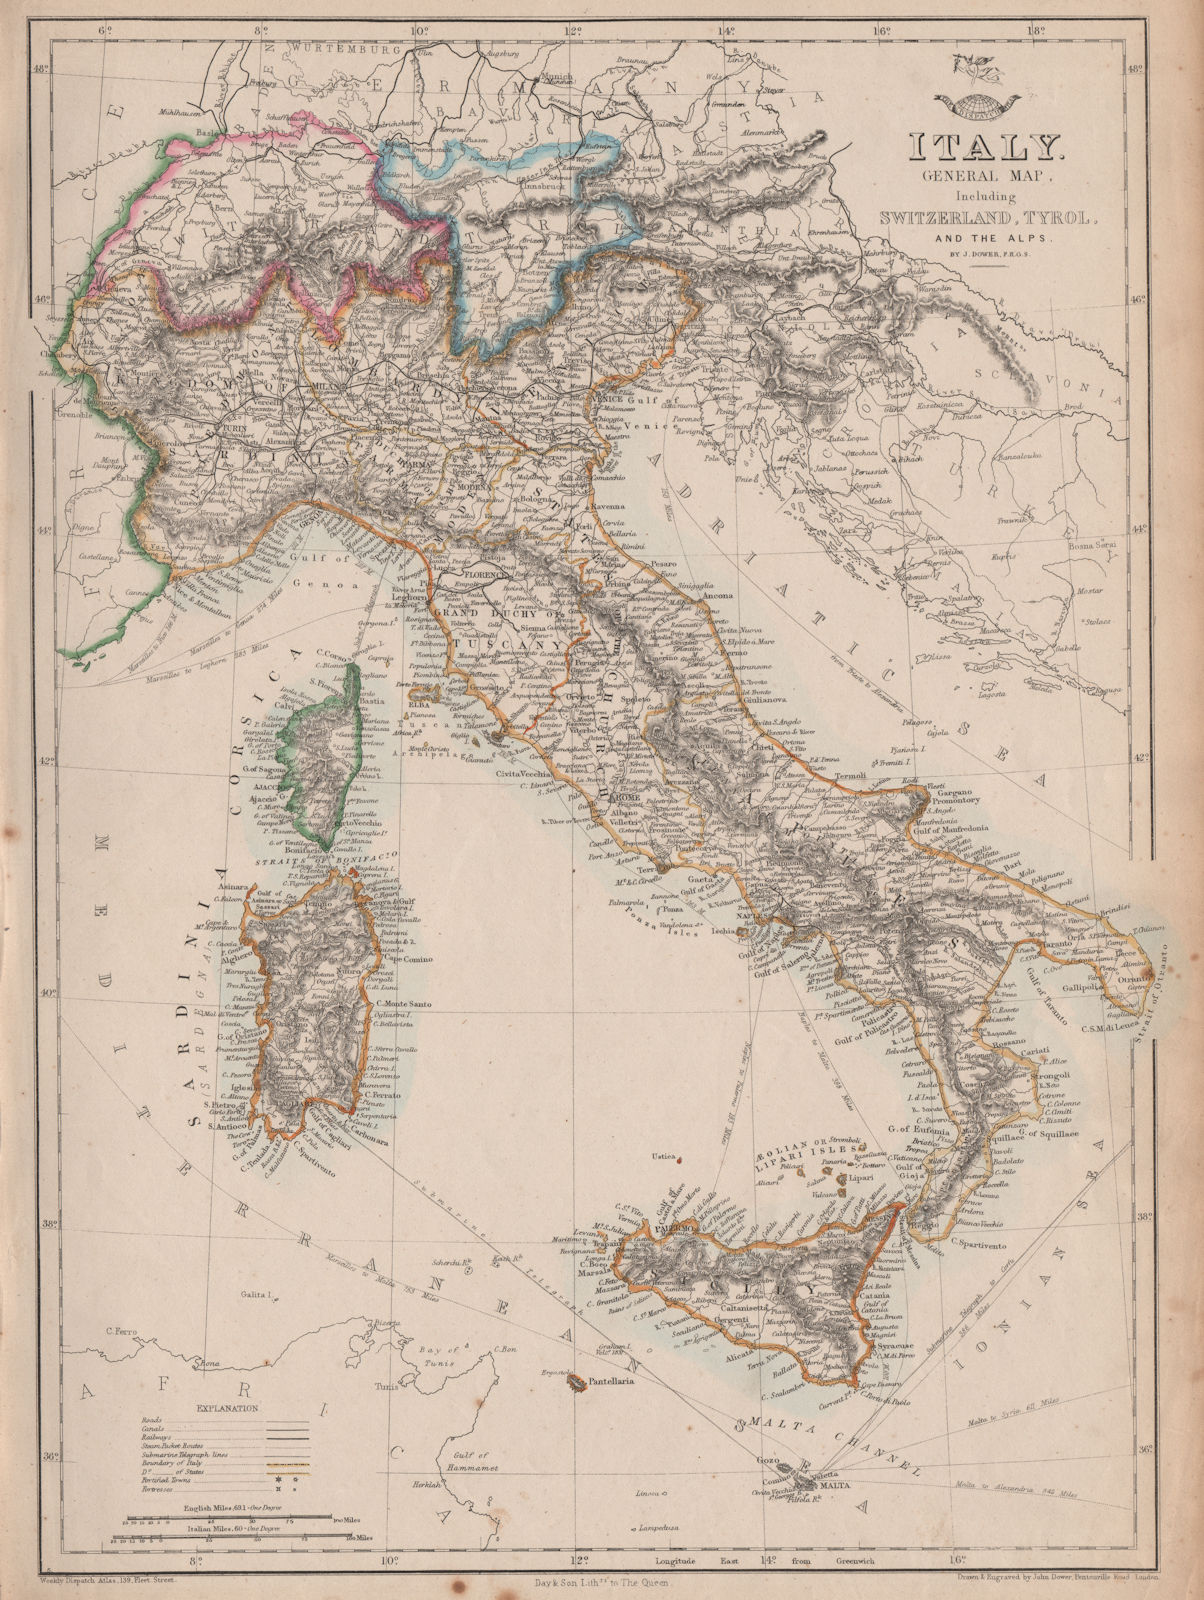 ITALY SWITZERLAND TYROL ALPS. Italian unification.DOWER.Dispatch atlas 1863 map